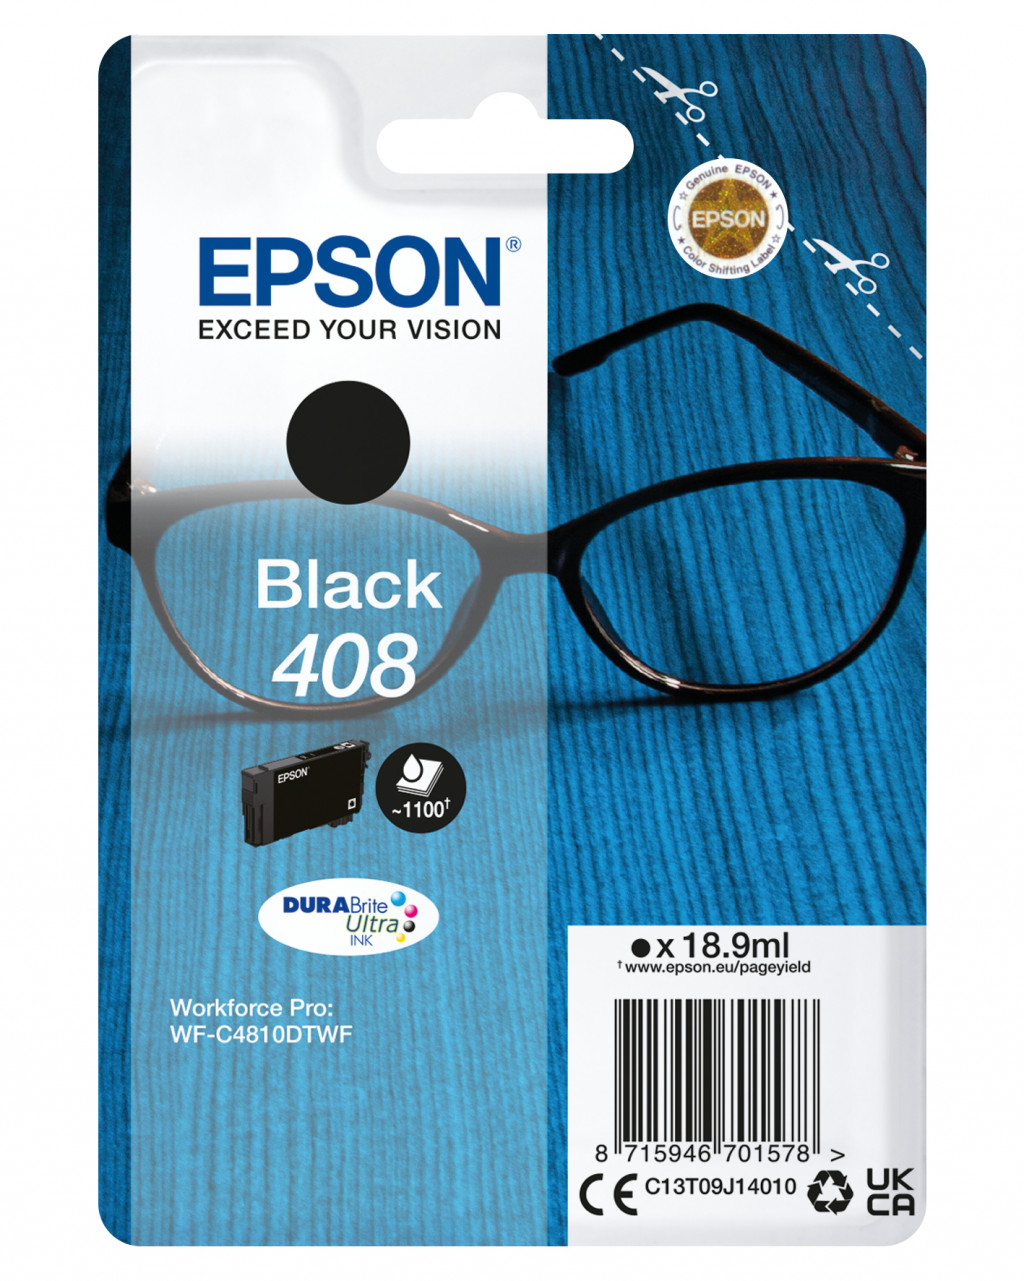 Epson DURABrite Ultra 408L | Ink cartrige | Black